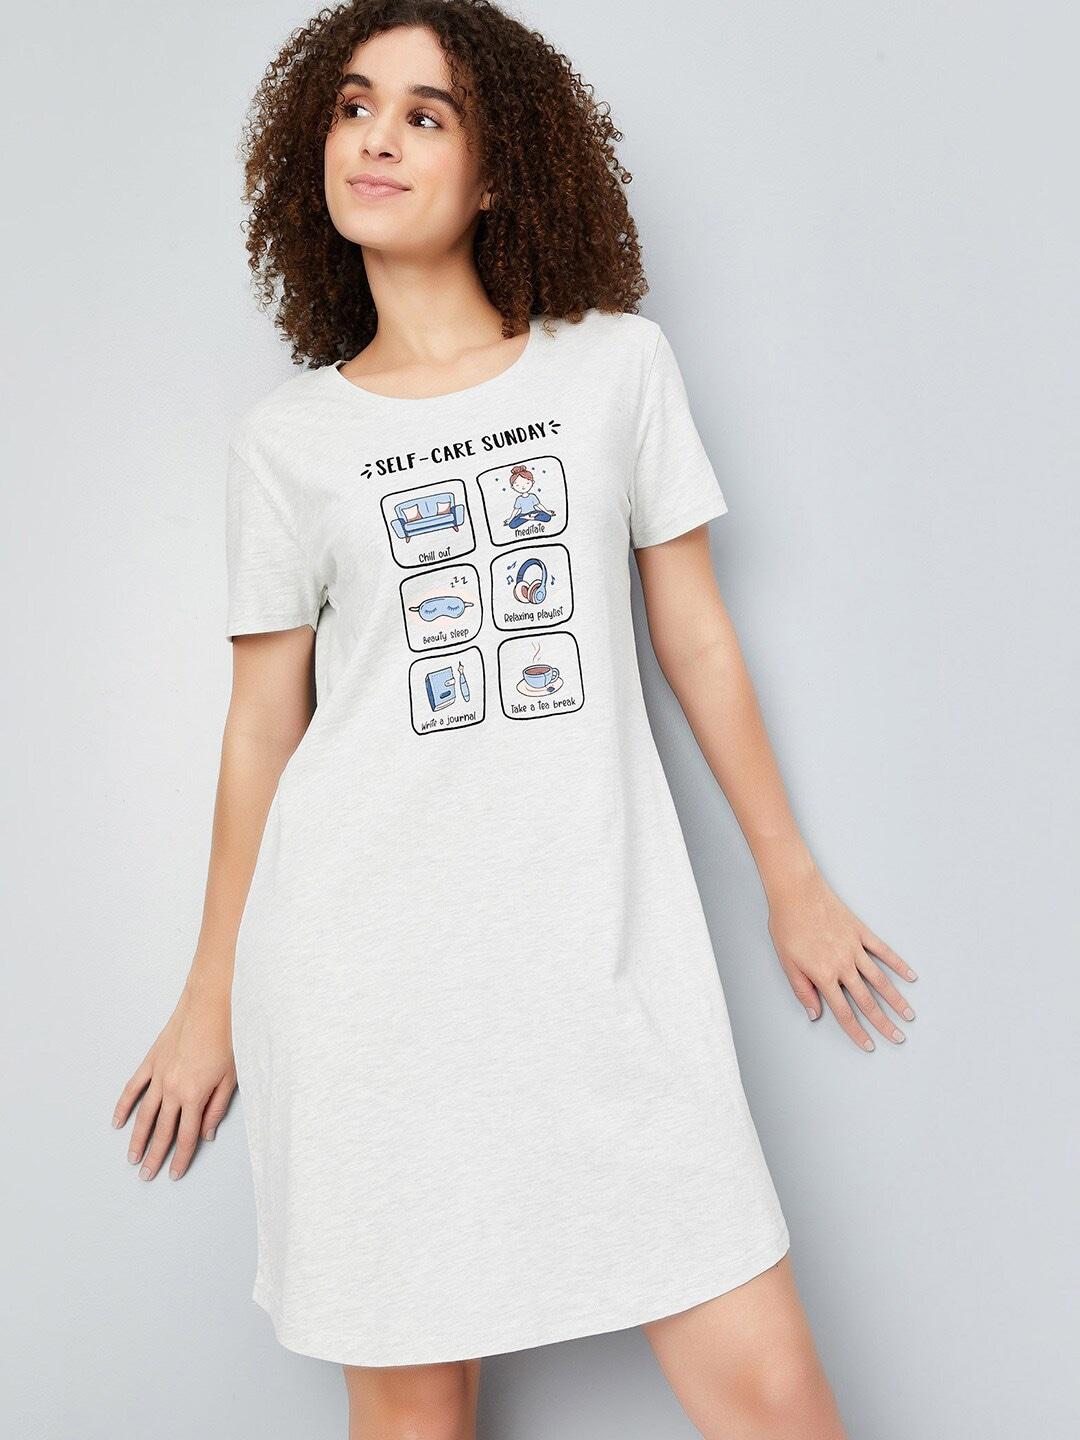 max-graphic-printed-t-shirt-nightdress